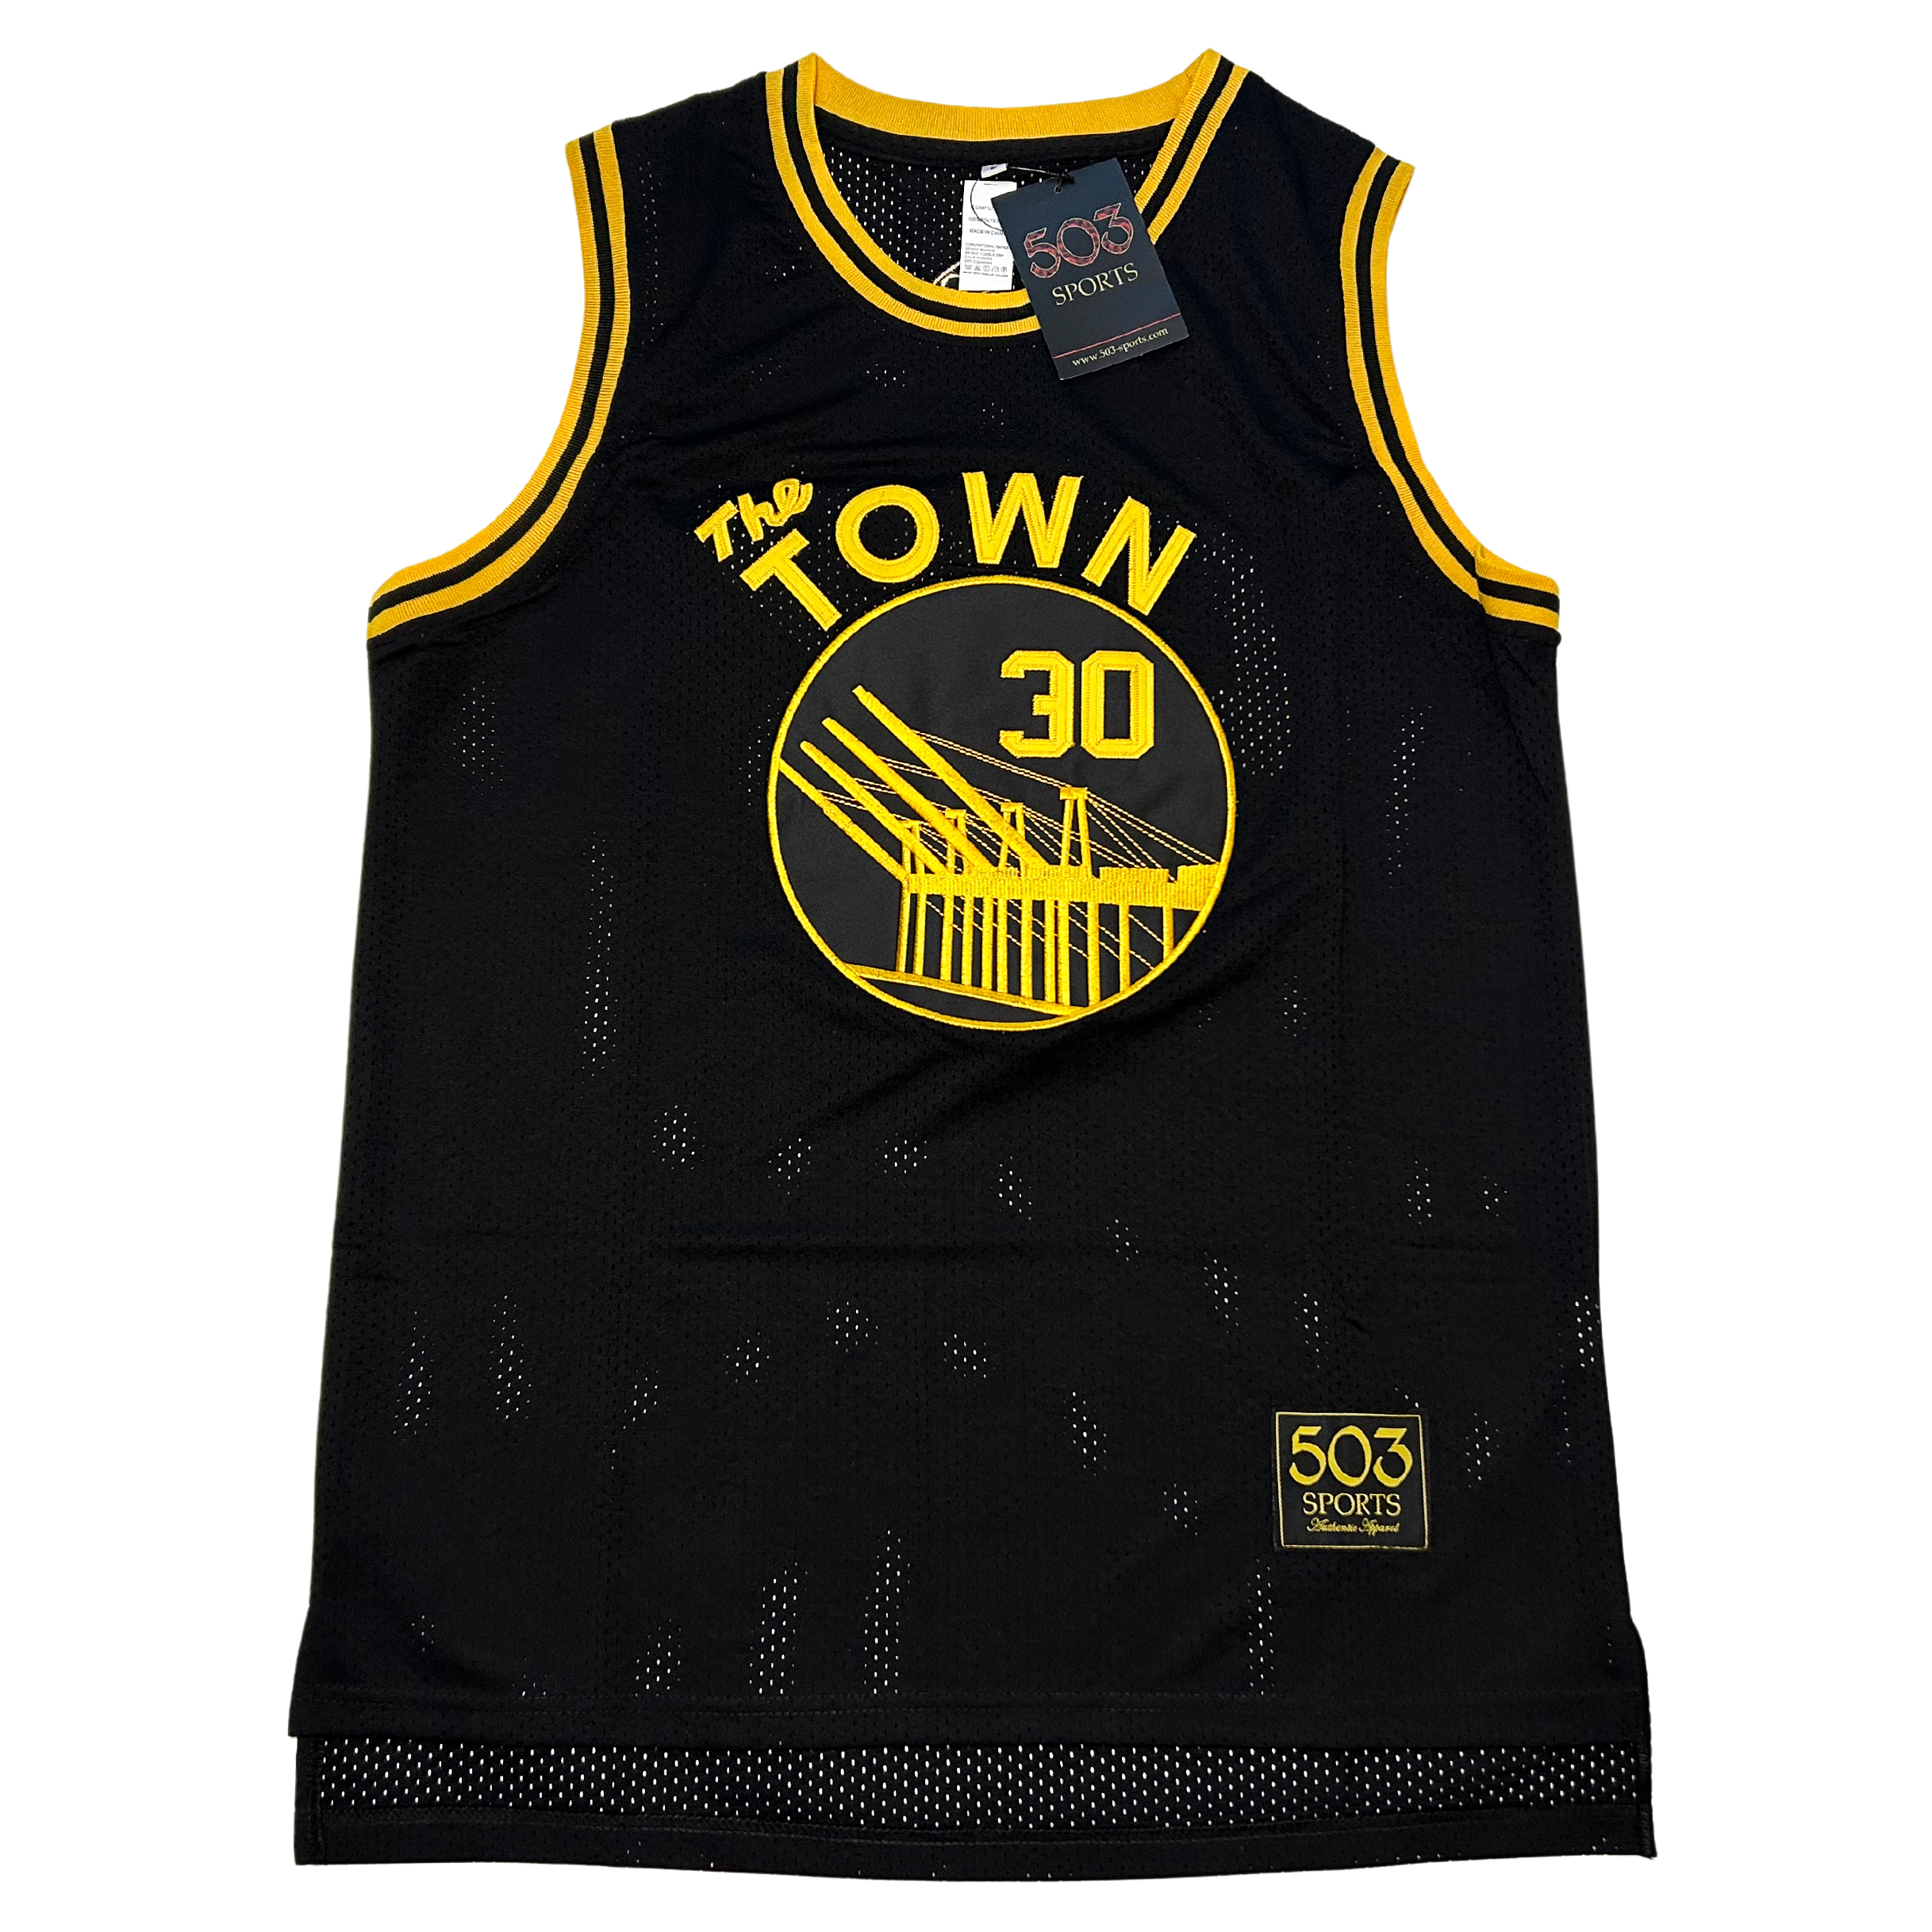 San Diego Allstars Basketball Jersey Custom Sublimated Basketball Uniform -  China Custom Basketball Jersey and Team Basketball Jerseys price